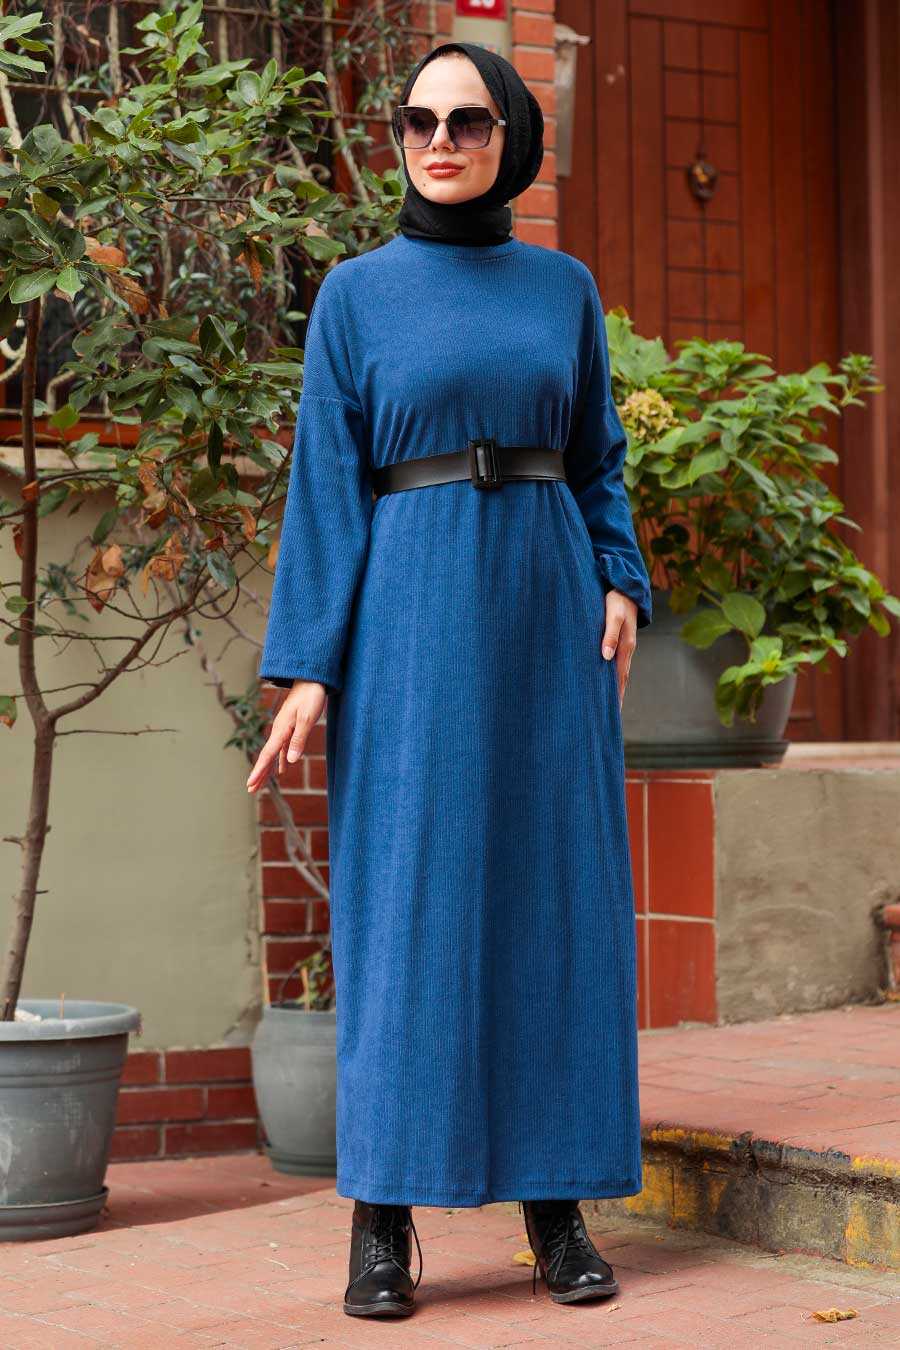 İndigo Blue Hijab Dress 5190IM - Neva-style.com